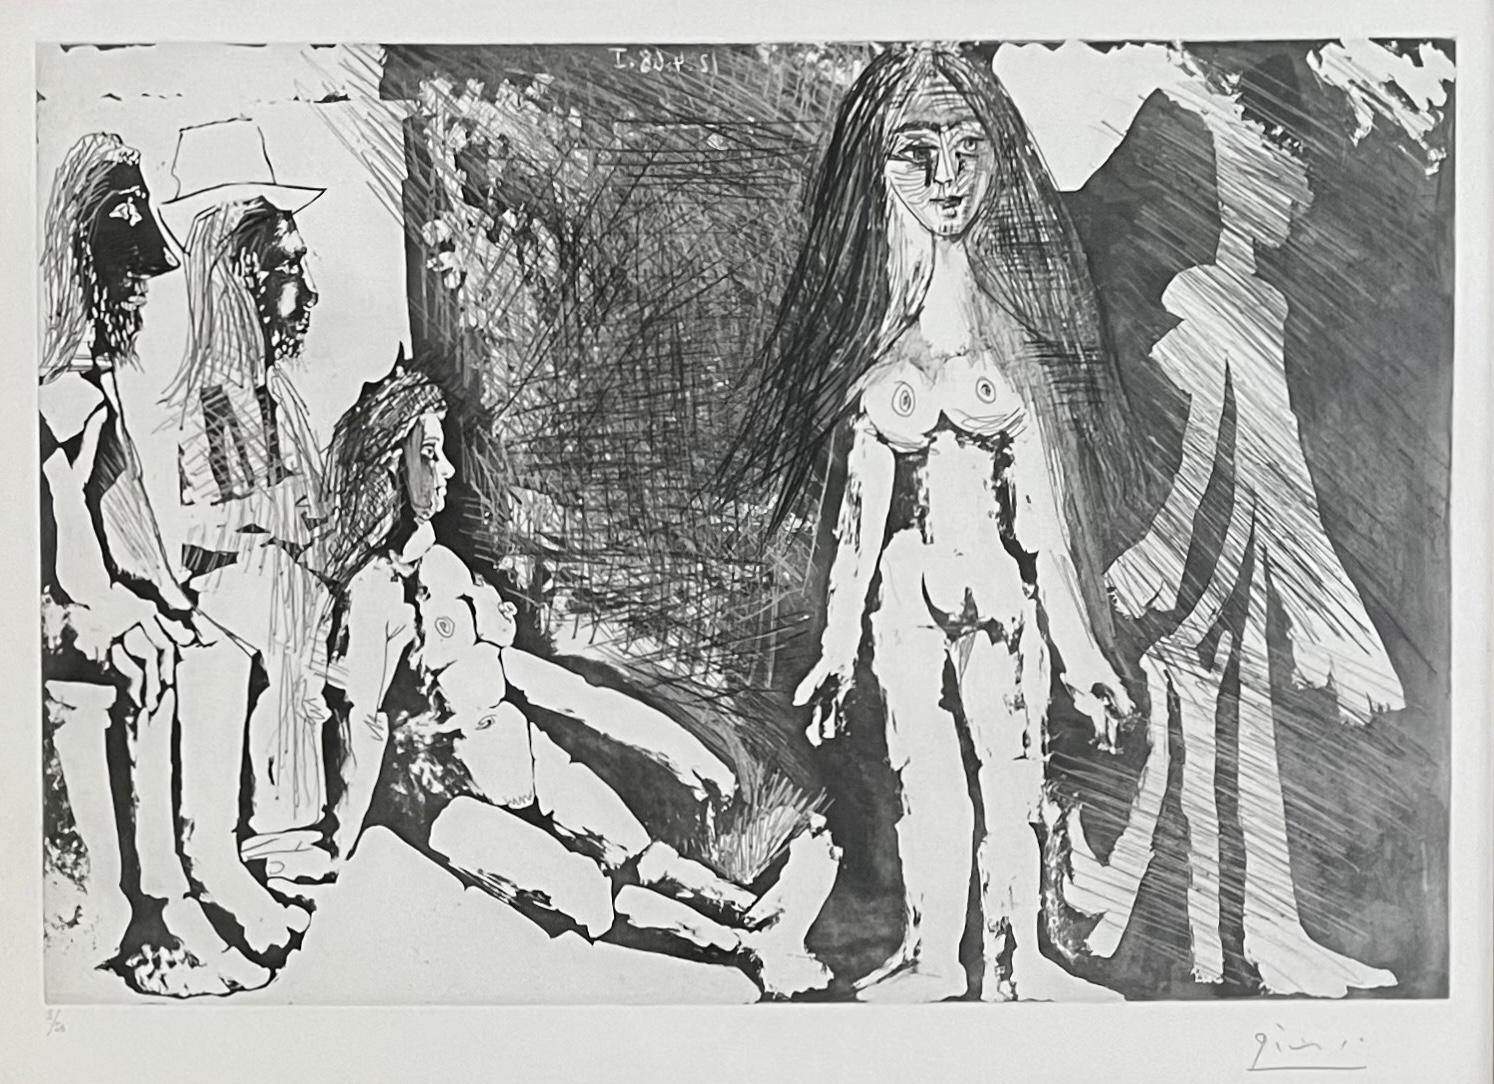 Künstler: Pablo Picasso (1881-1973)
Titel: Jeune fille regardée par une vielle femme et deux hommes dont un gitan
Jahr: 1968
Medium: Radierung, Aquatinta und Kaltnadel auf Rives BFK Papier
Größe: 12,5 x 18,5 (Platte); 17,75 x 24,25 Zoll (Papier);